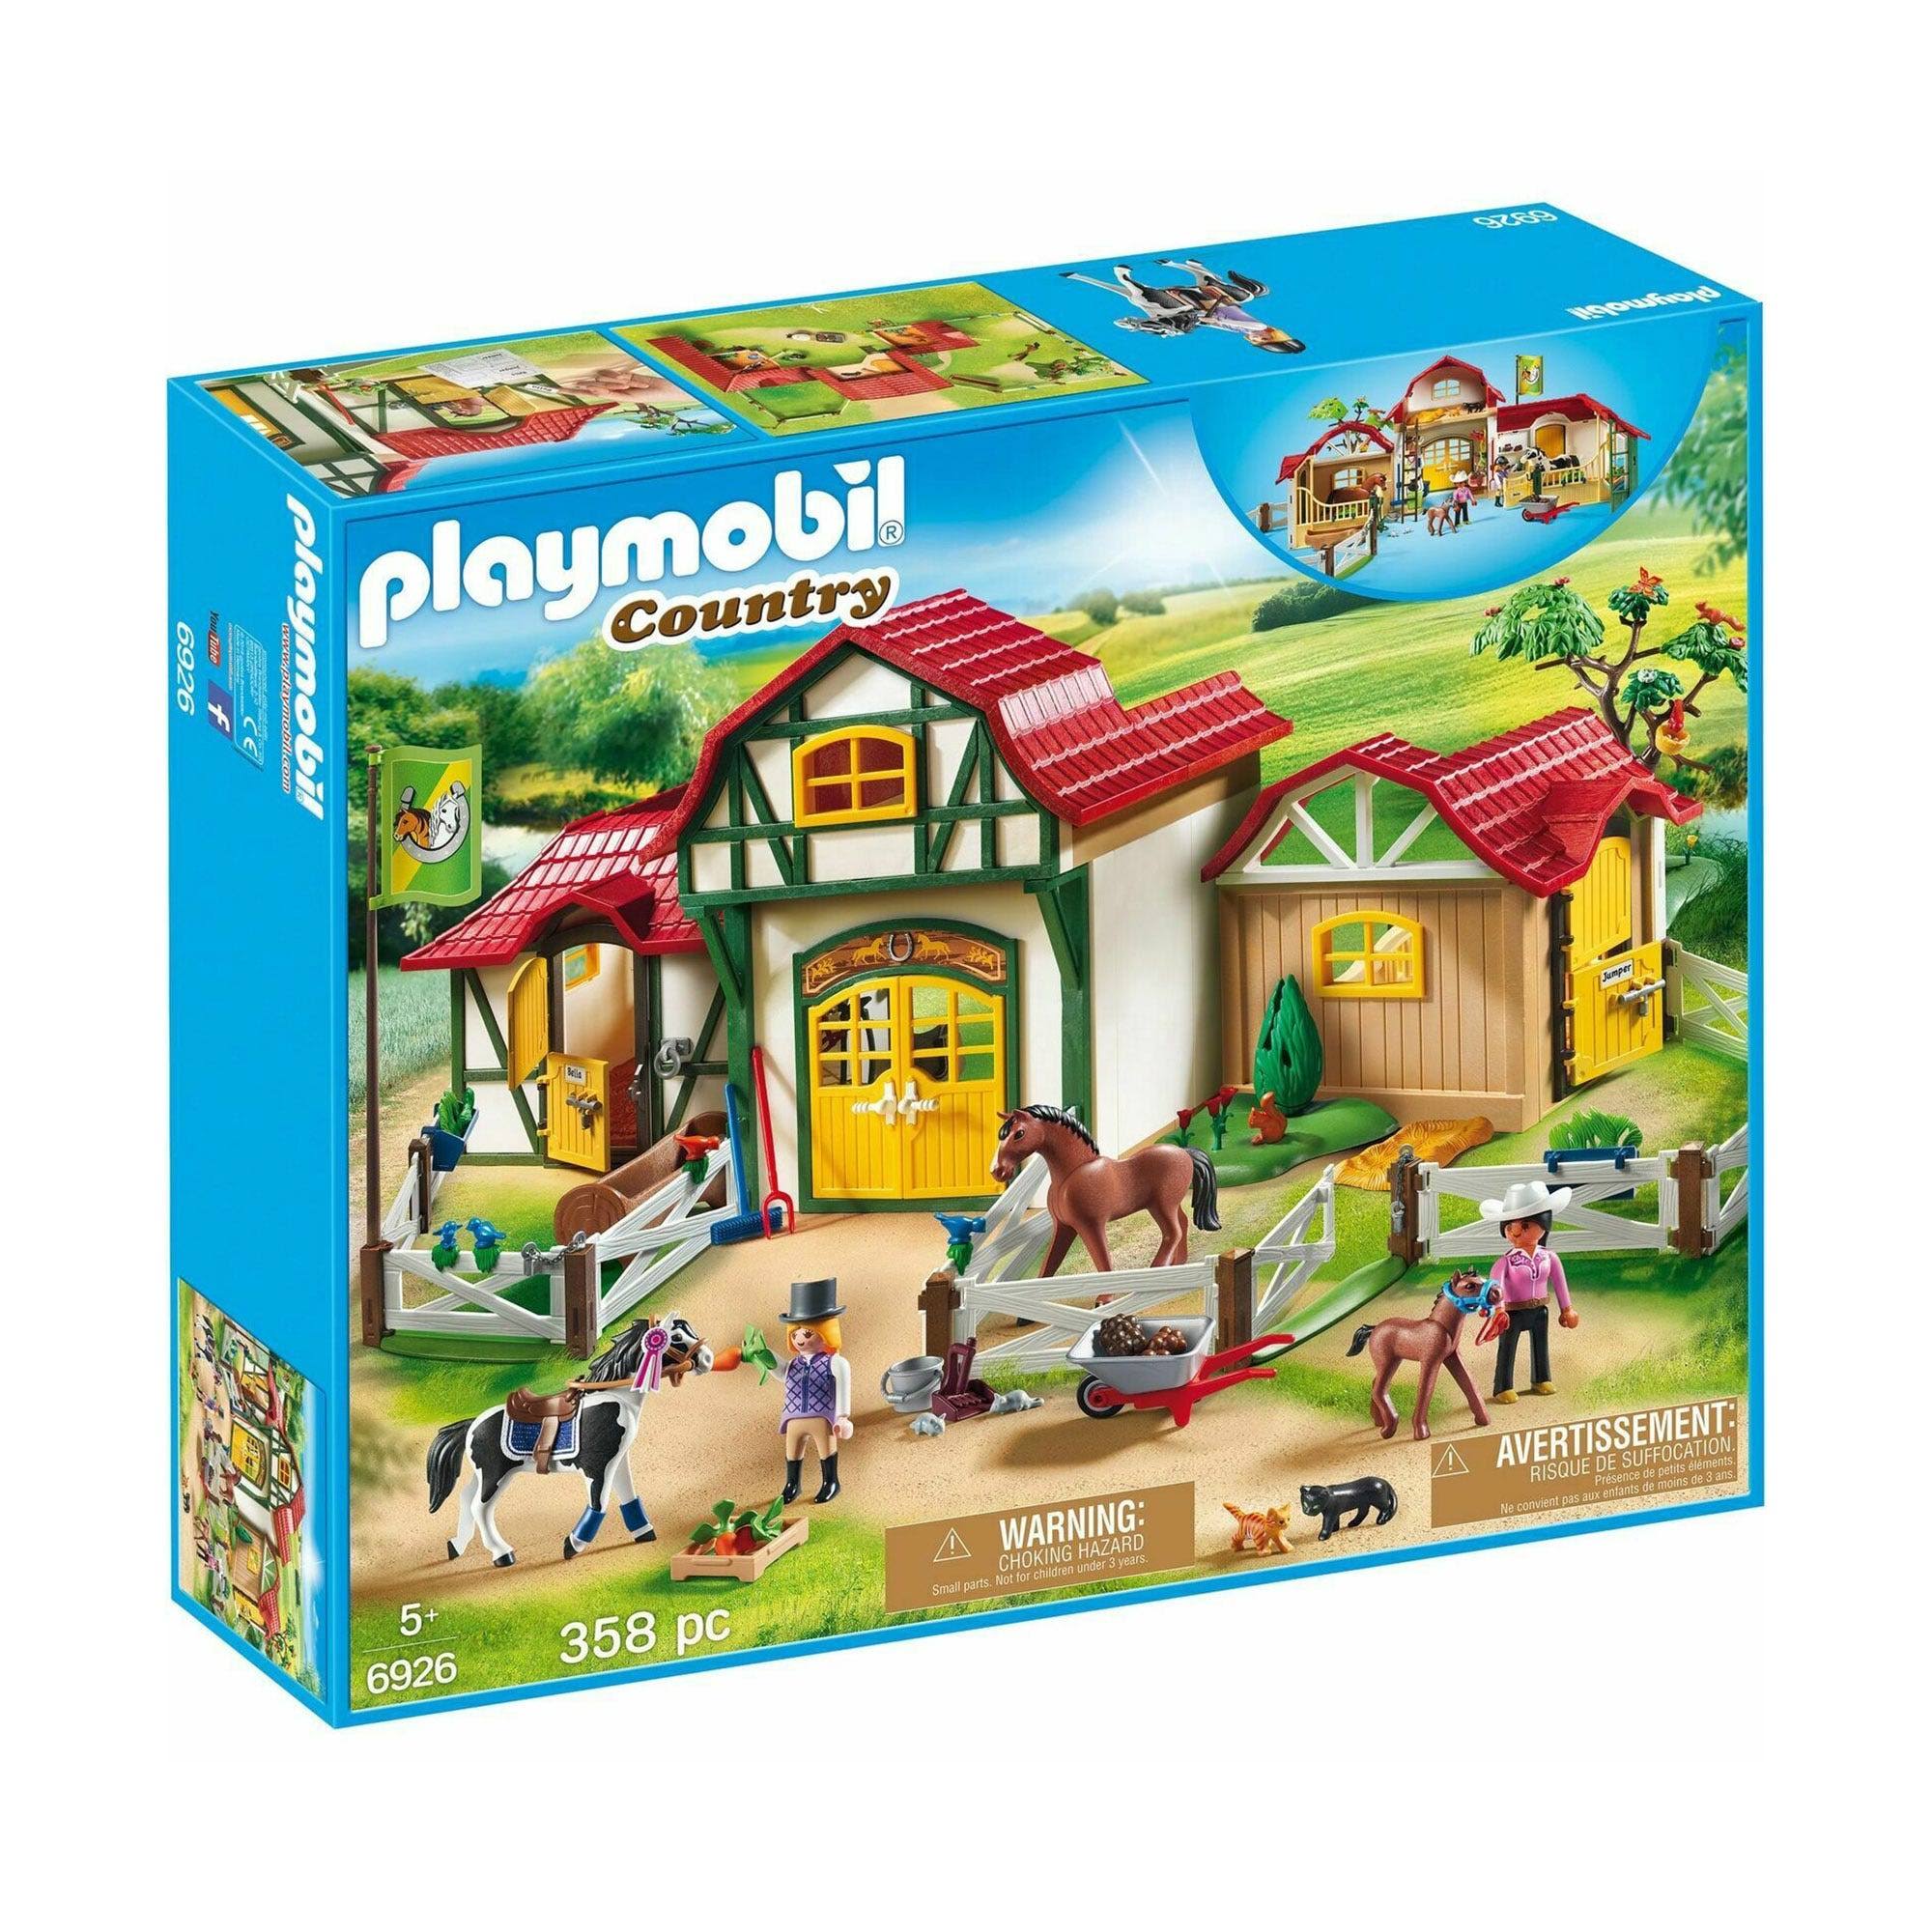 Playmobil Country Large Horse Farm Life Playset Animal Figures Toy Set